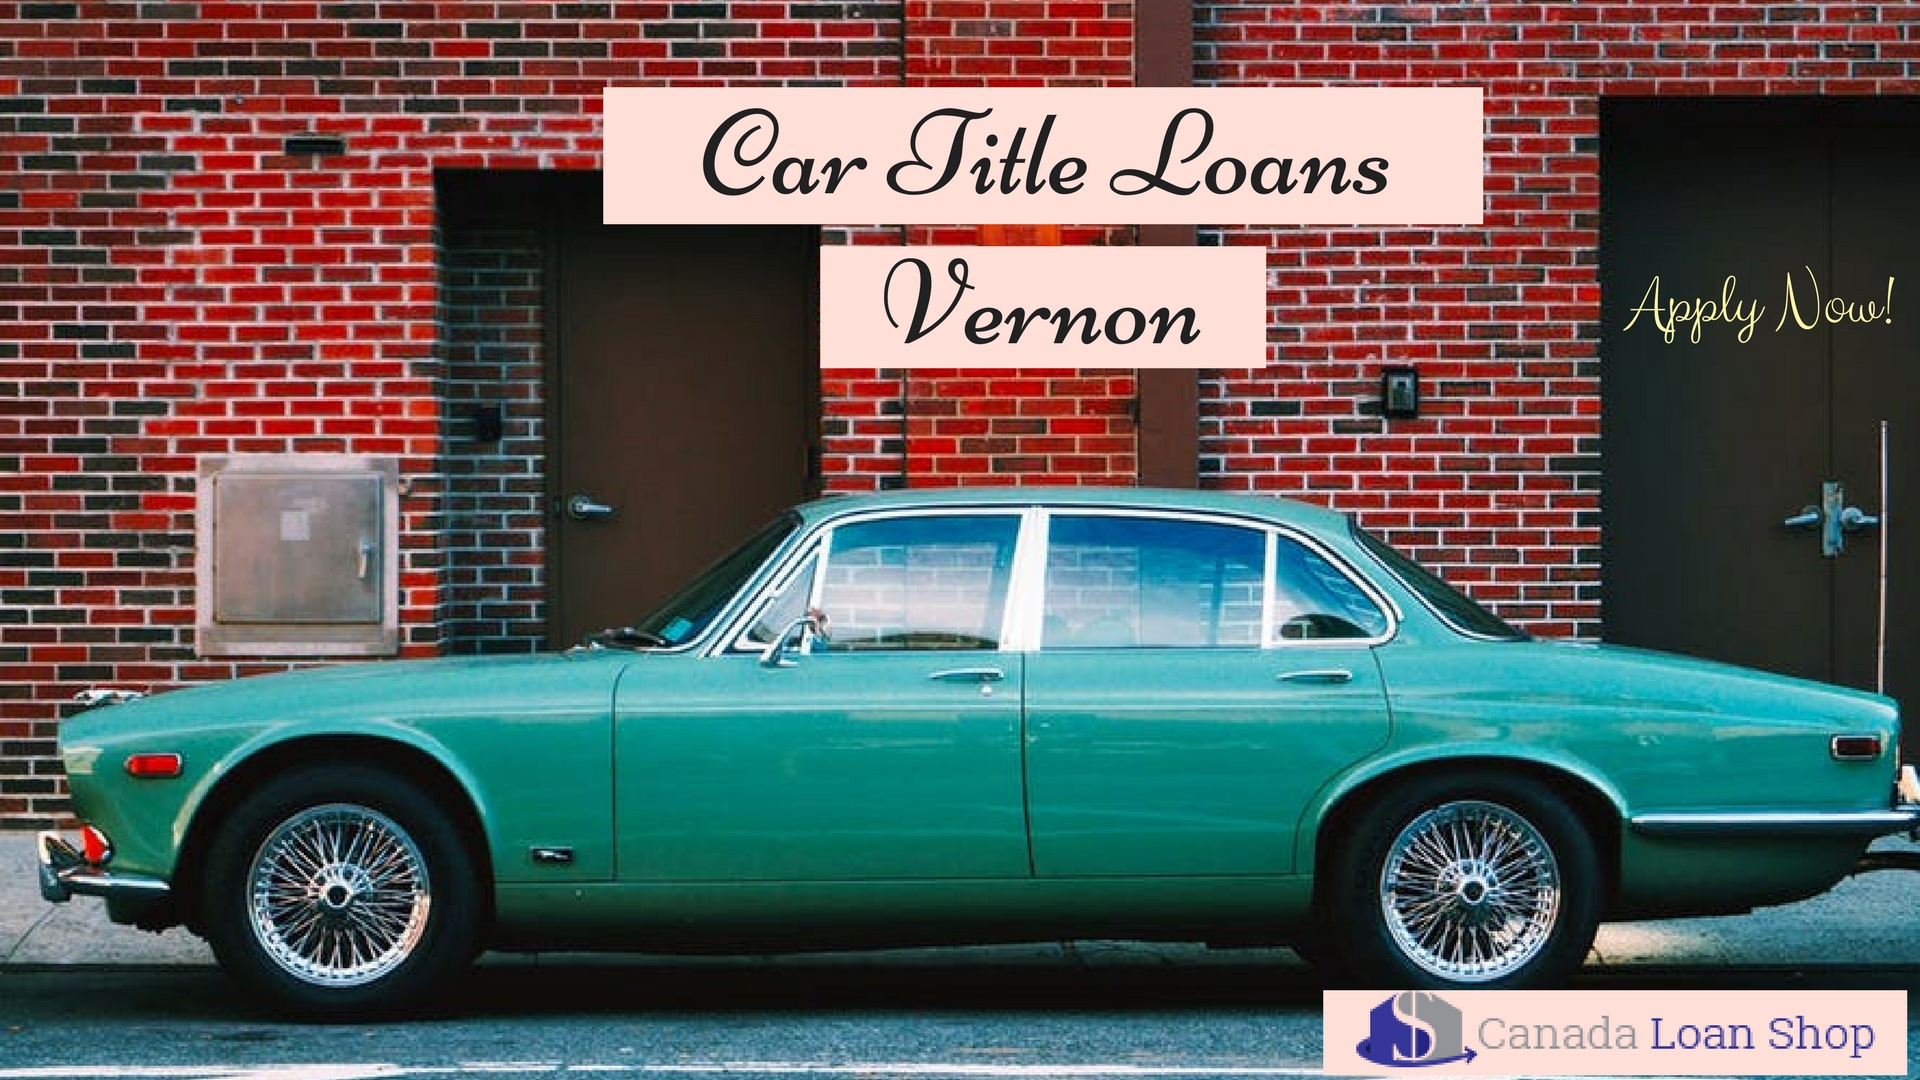 Car Title Loans Vernon